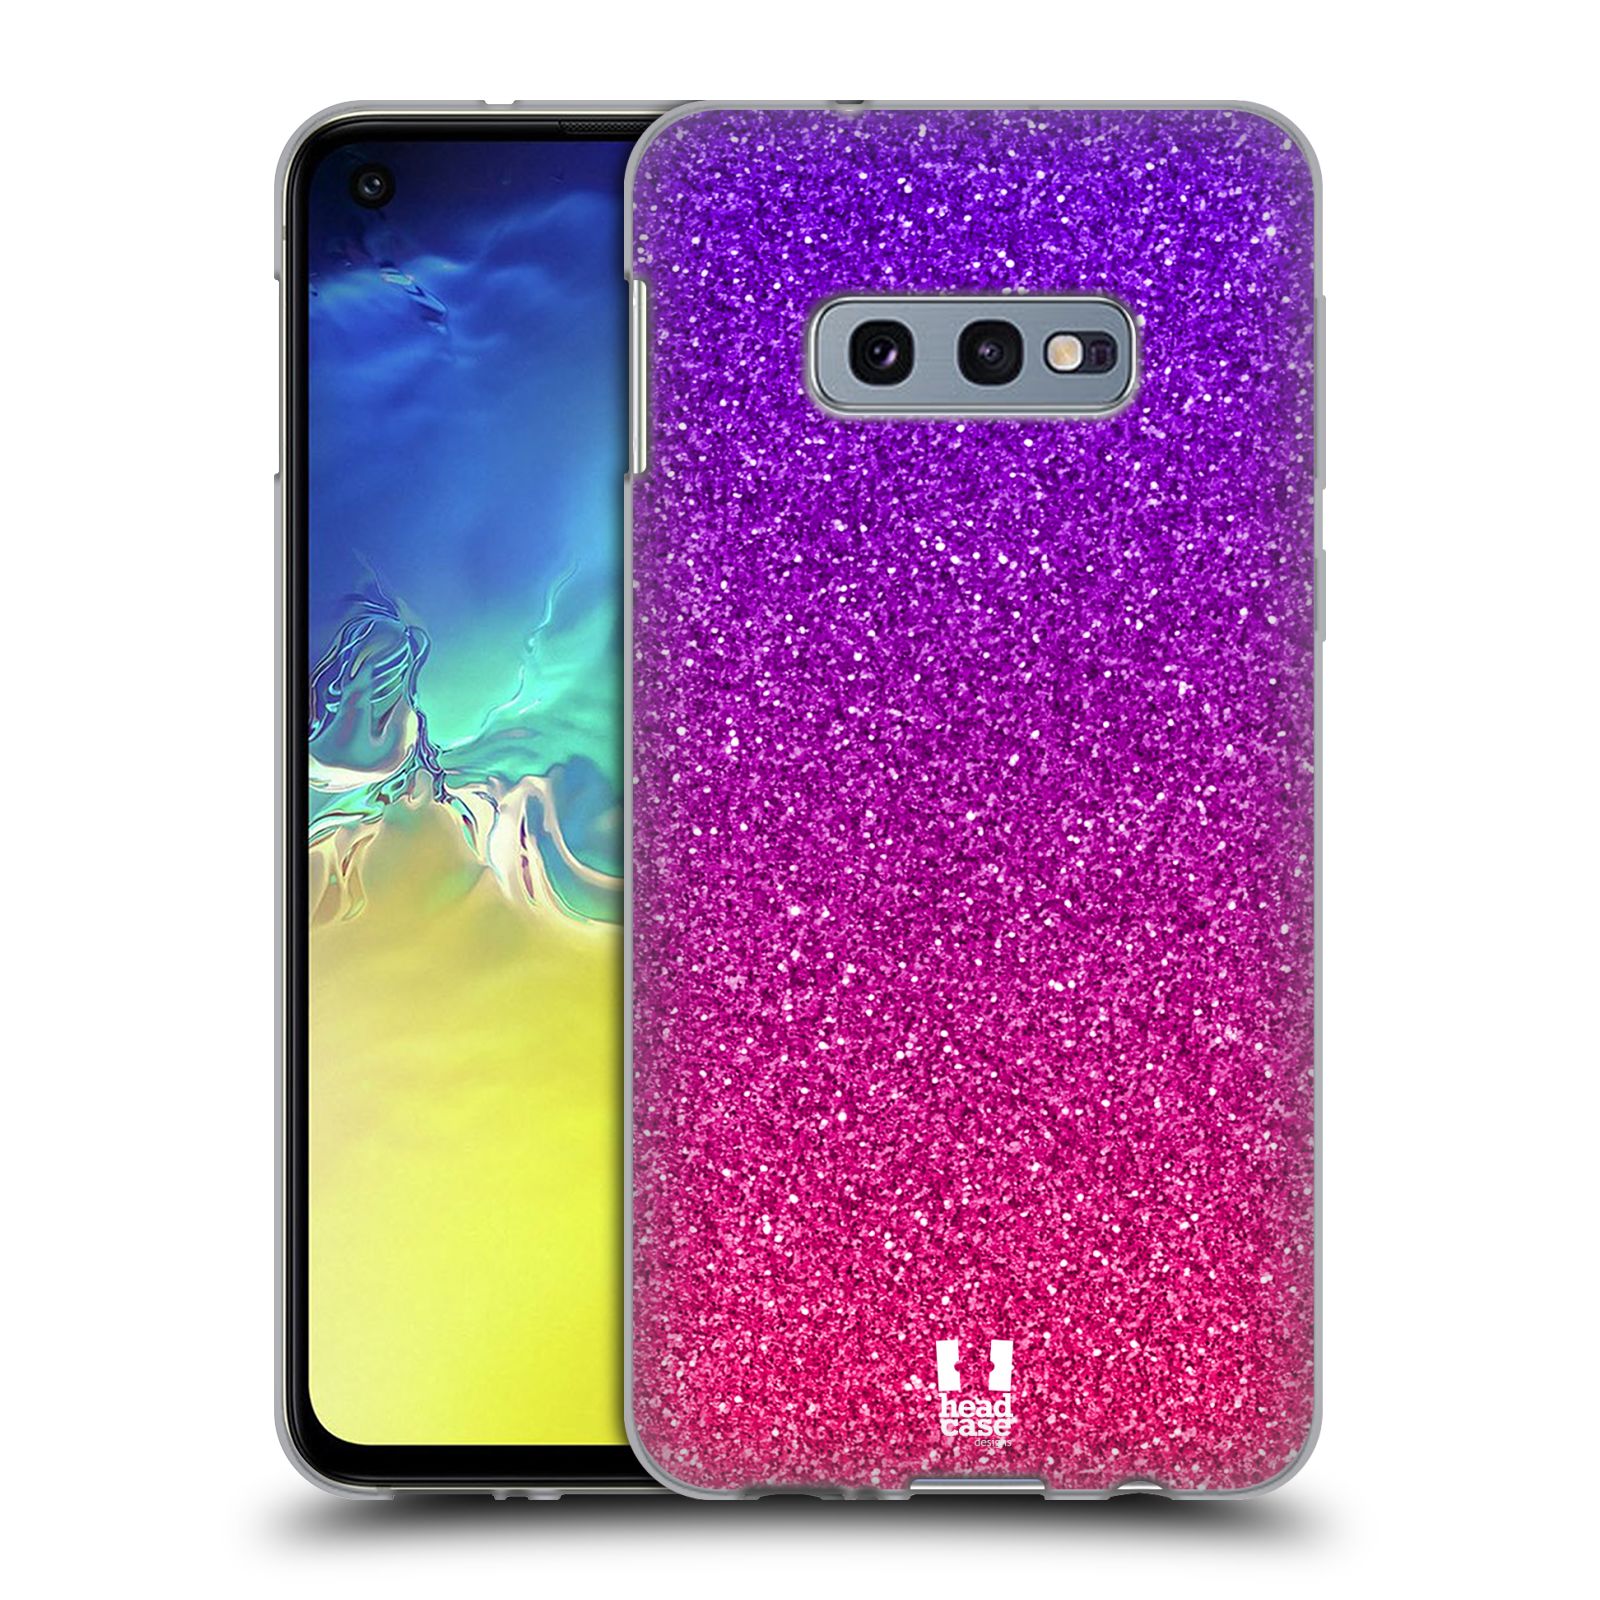 Silikonové pouzdro na mobil Samsung Galaxy S10e - Head Case - Mix Pink (Silikonový kryt, obal, pouzdro na mobilní telefon Samsung Galaxy S10e SM-G970 s motivem Mix Pink)